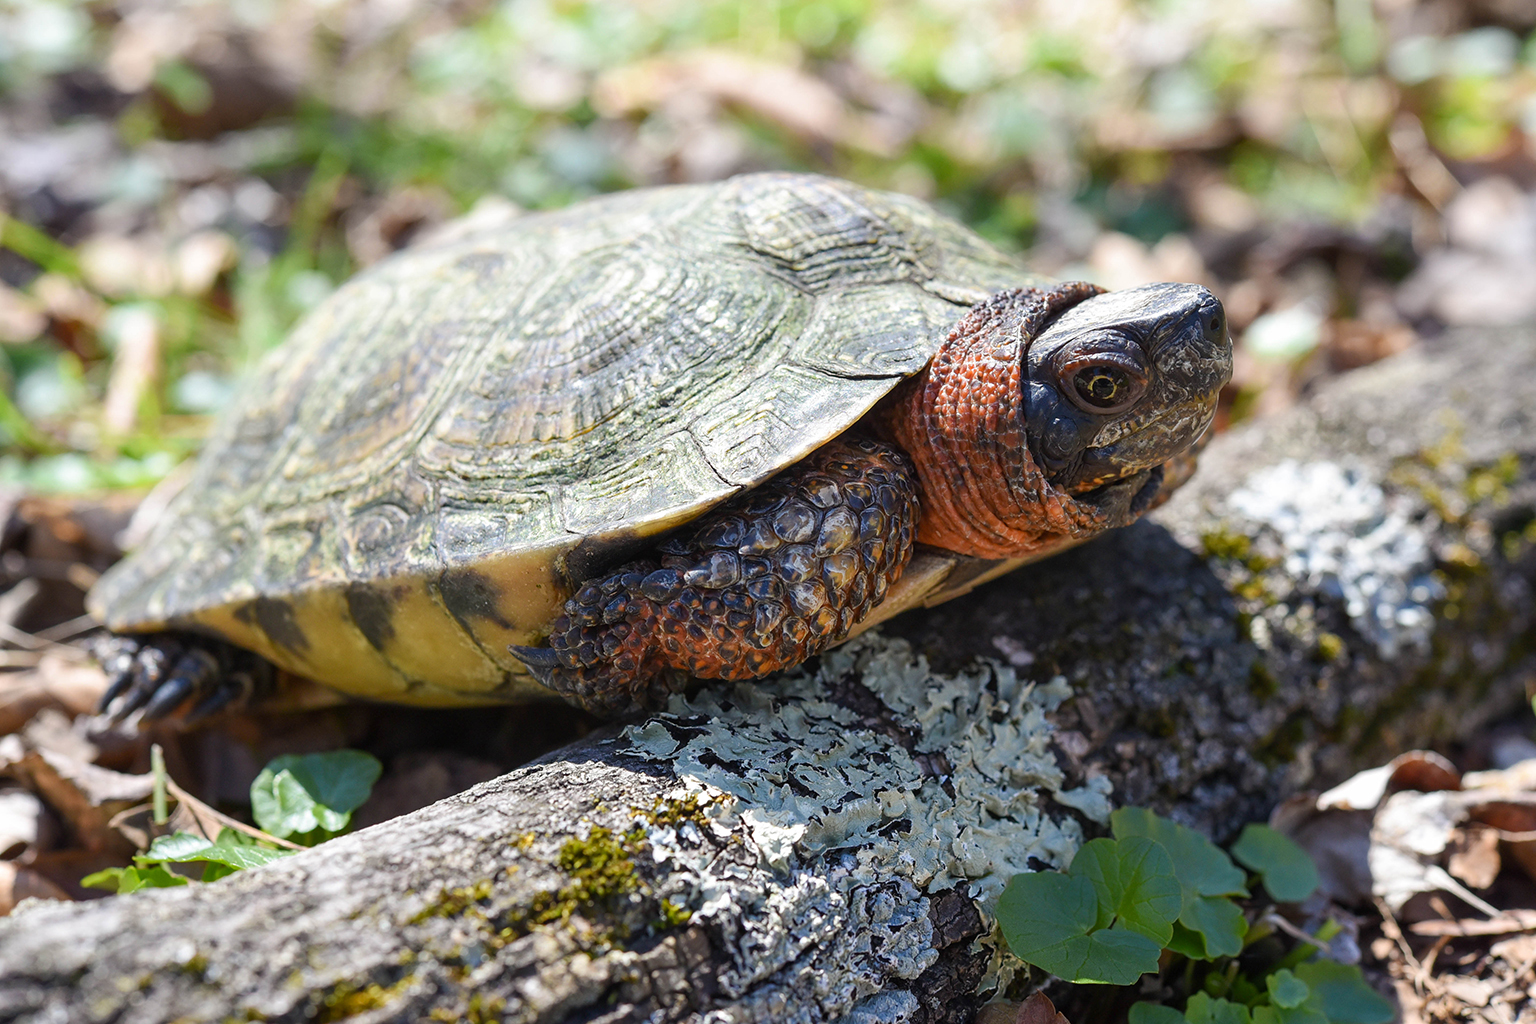 Do wood turtles live alone?